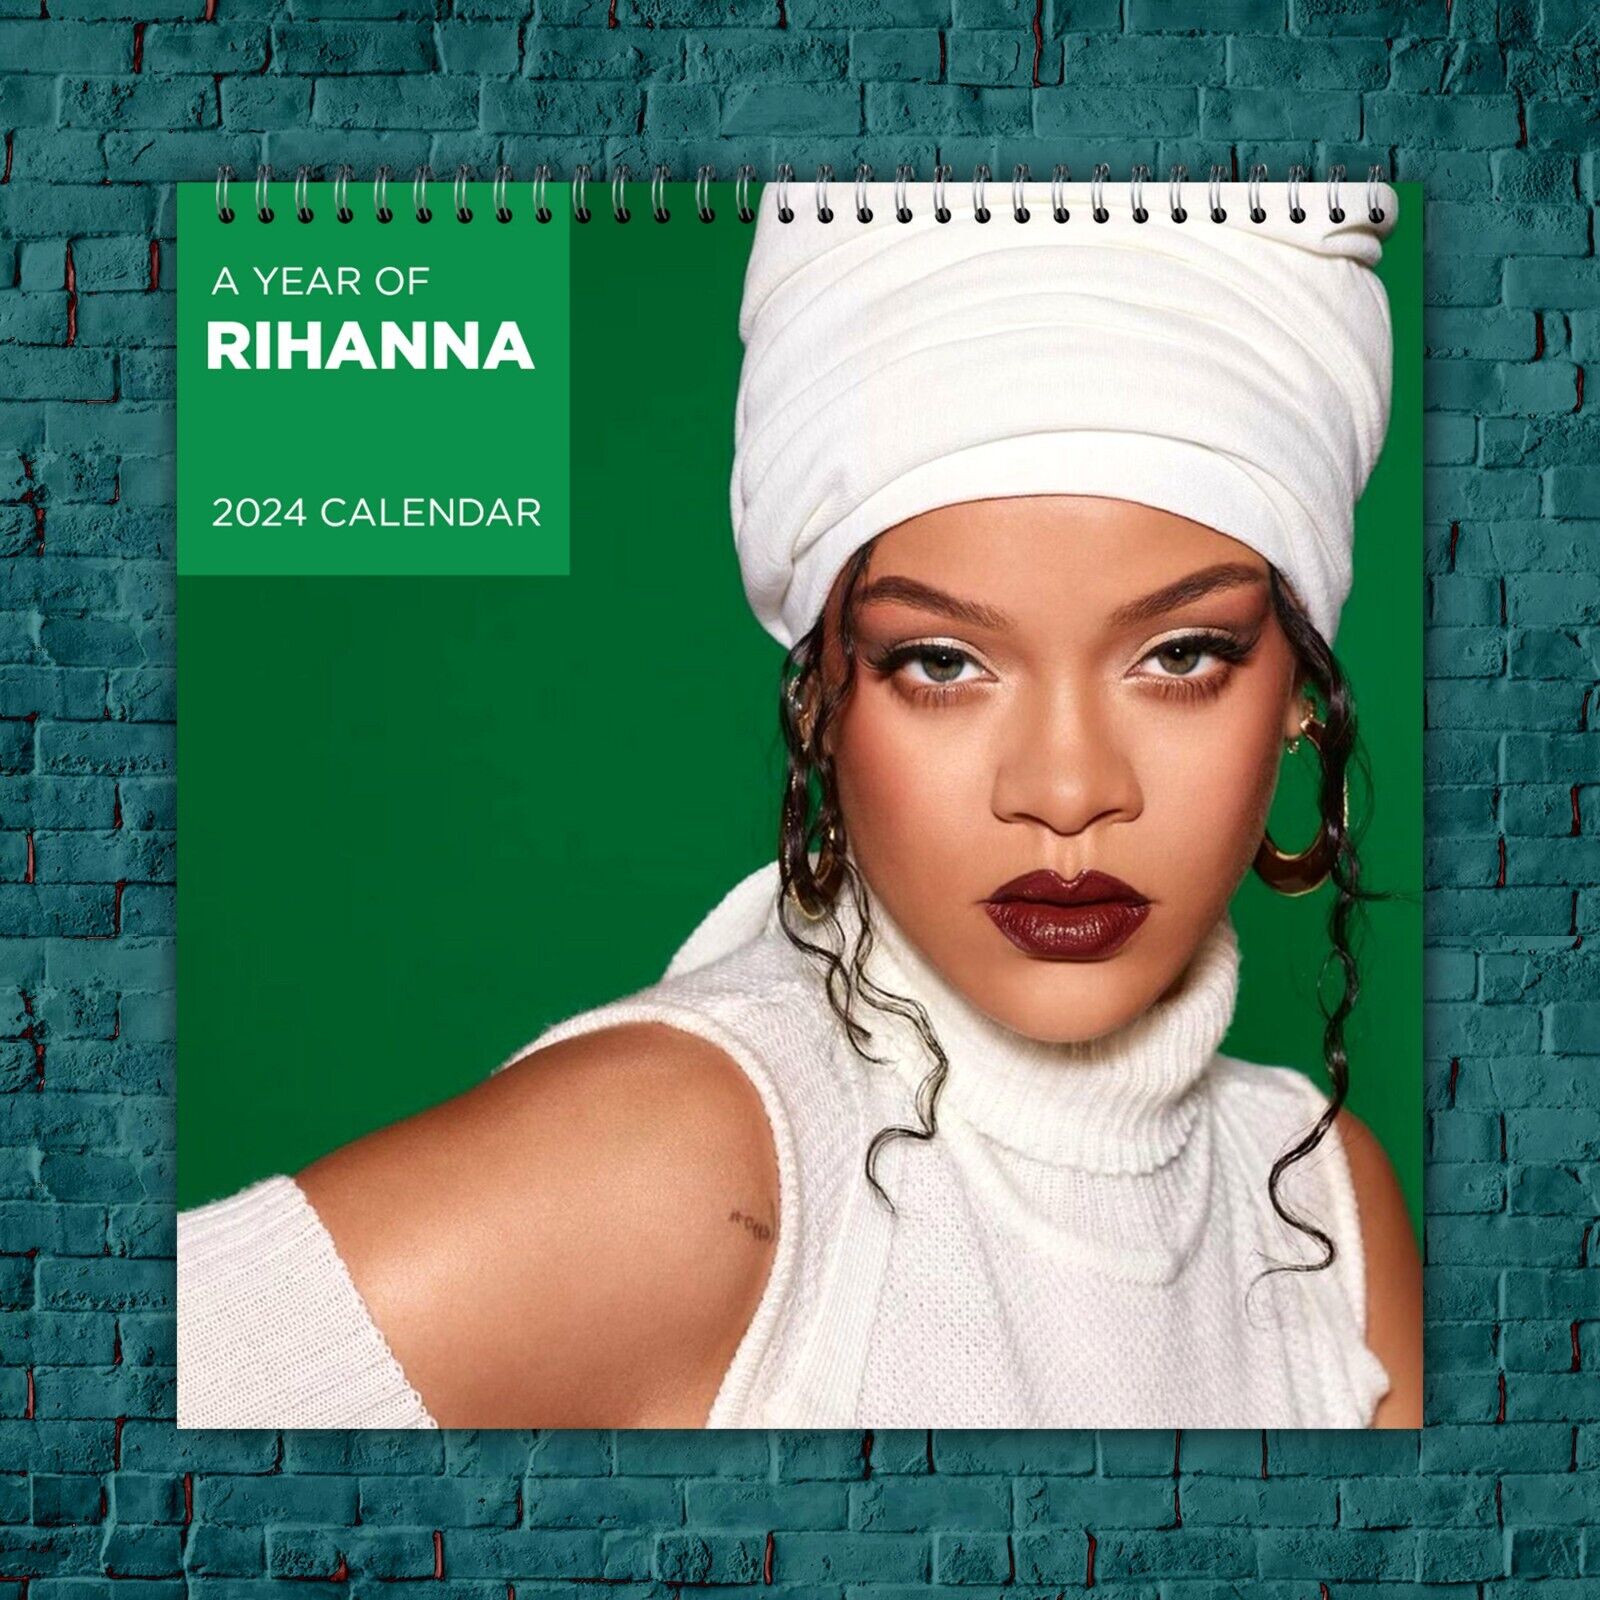 Rihanna Calendar 2024 Rihanna 2024 Celebrity Wall Calendar Gift for